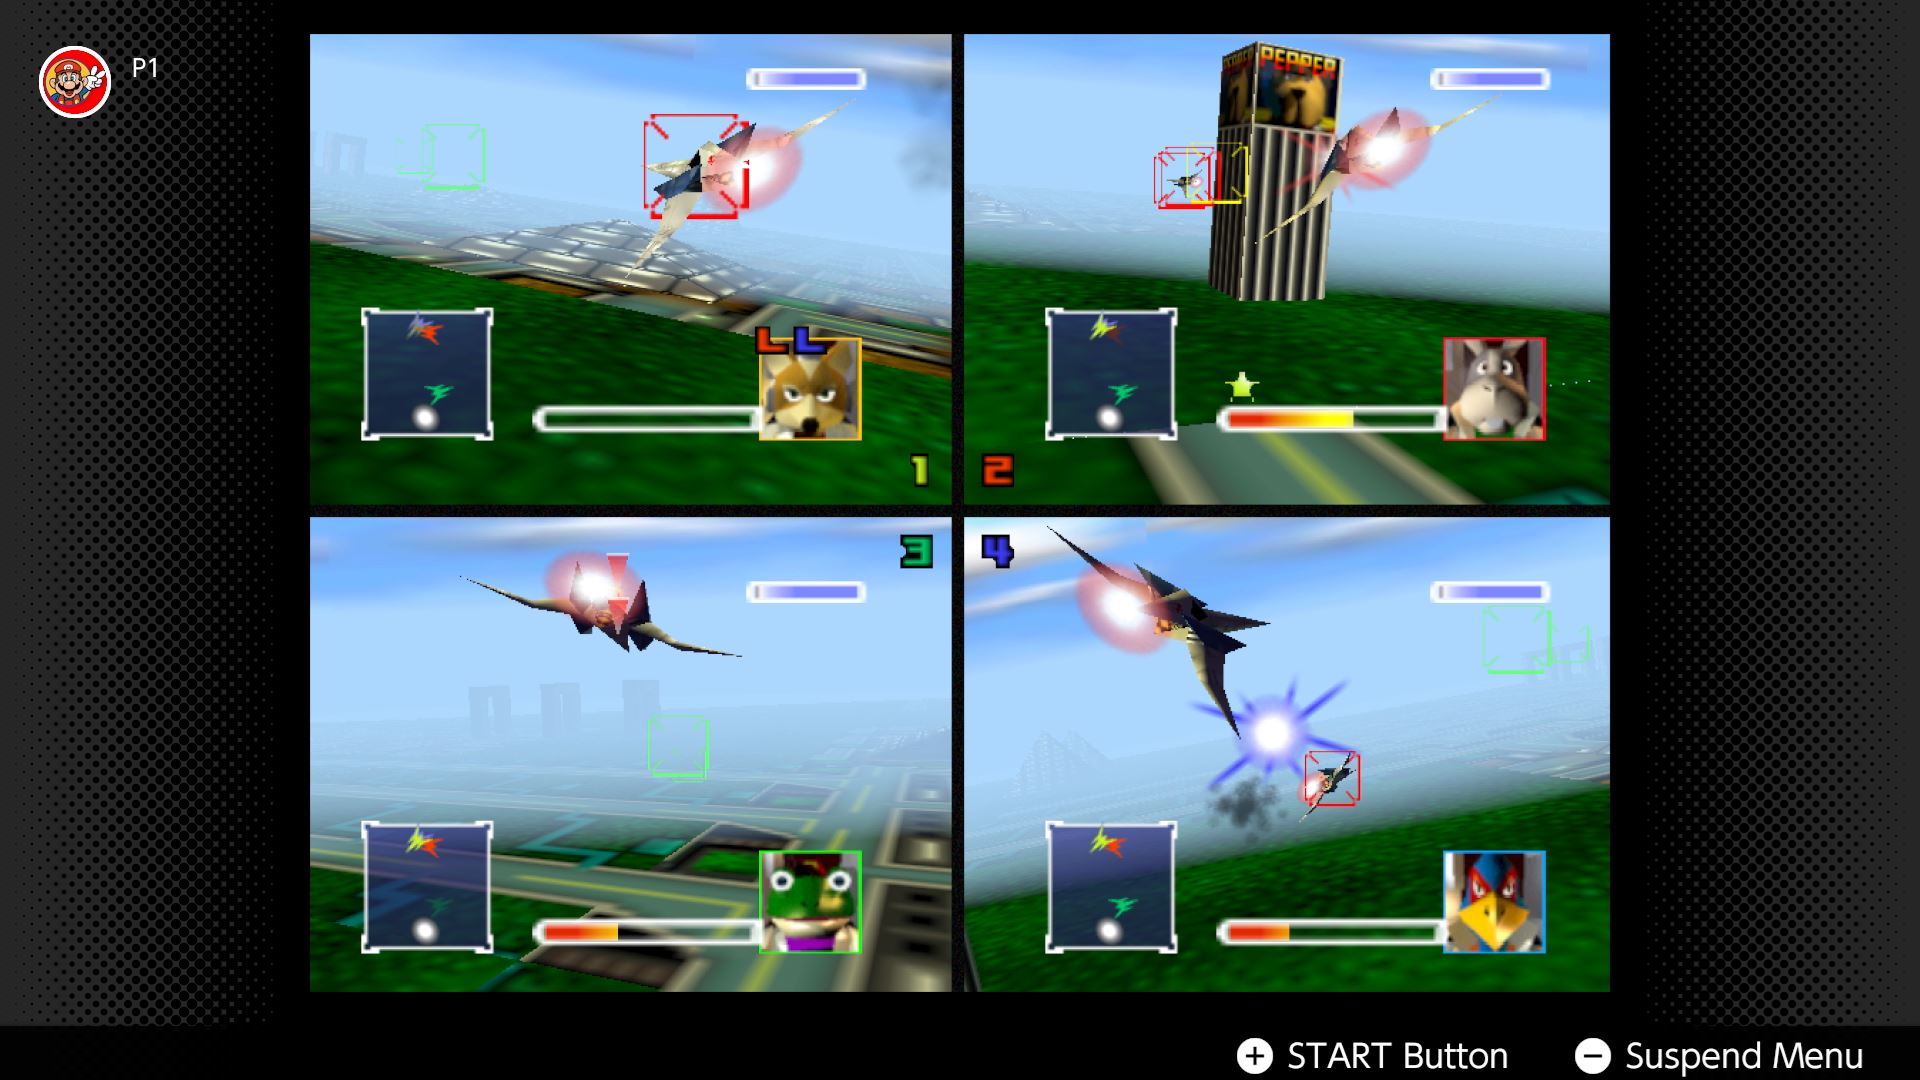 Nintendo 64 – Nintendo Switch Online